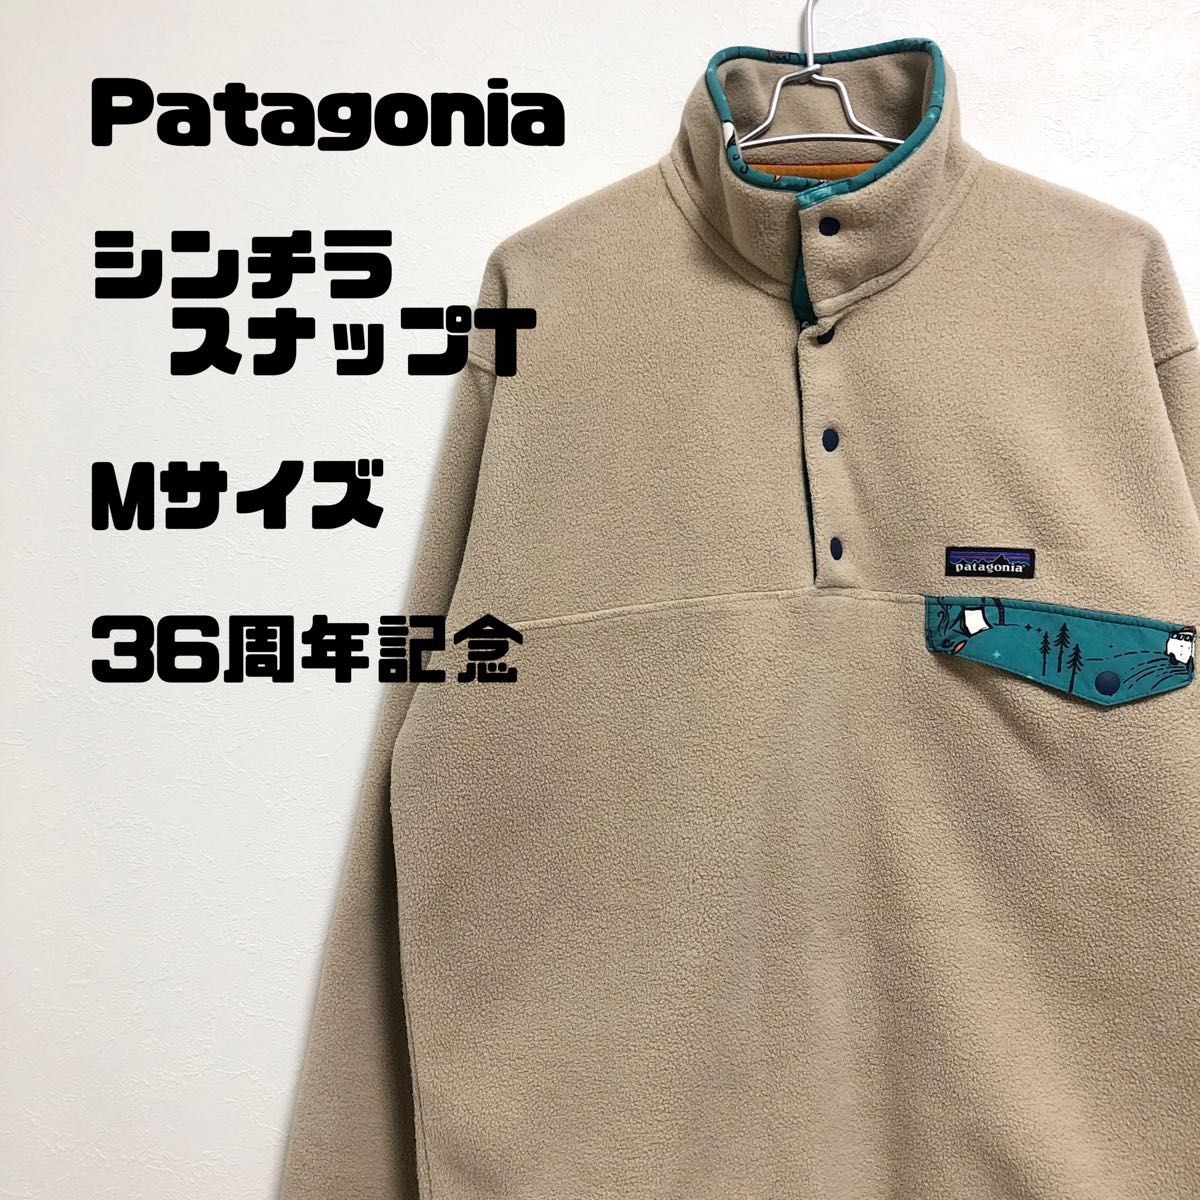 Patagonia シンチラ スナップT プルオーバー Mサイズ 36周年限定